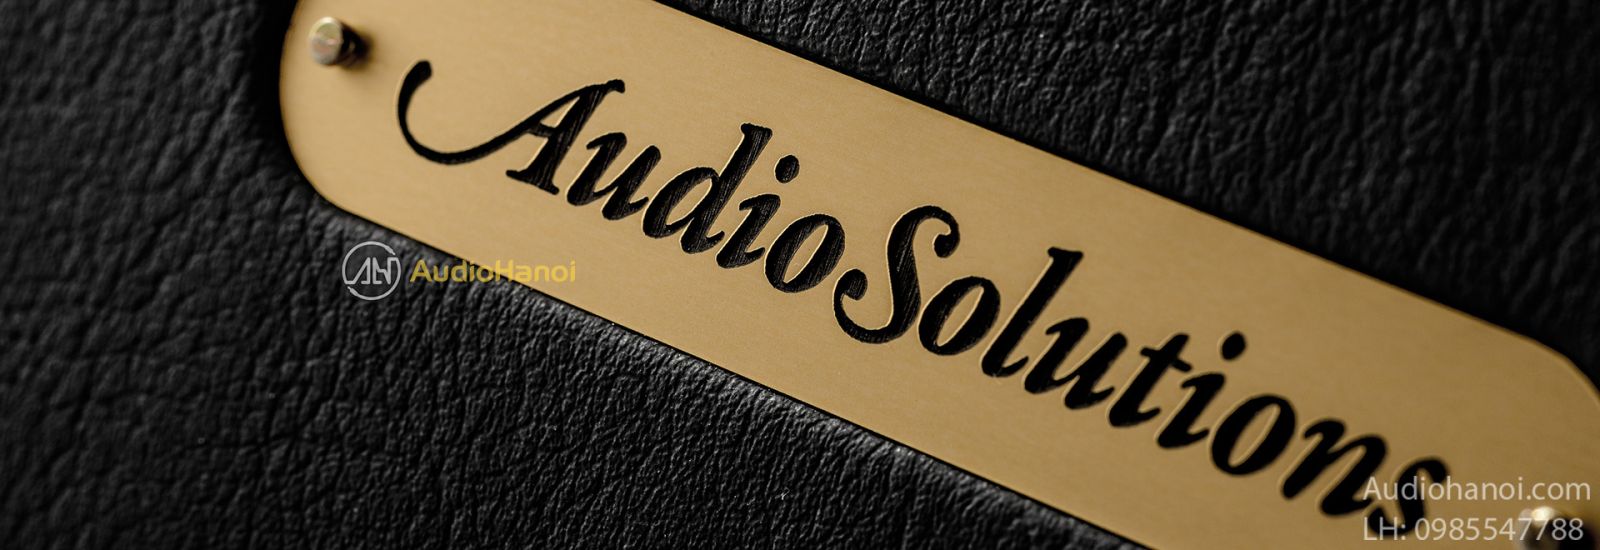 loa audiosolution virtuoso M logo